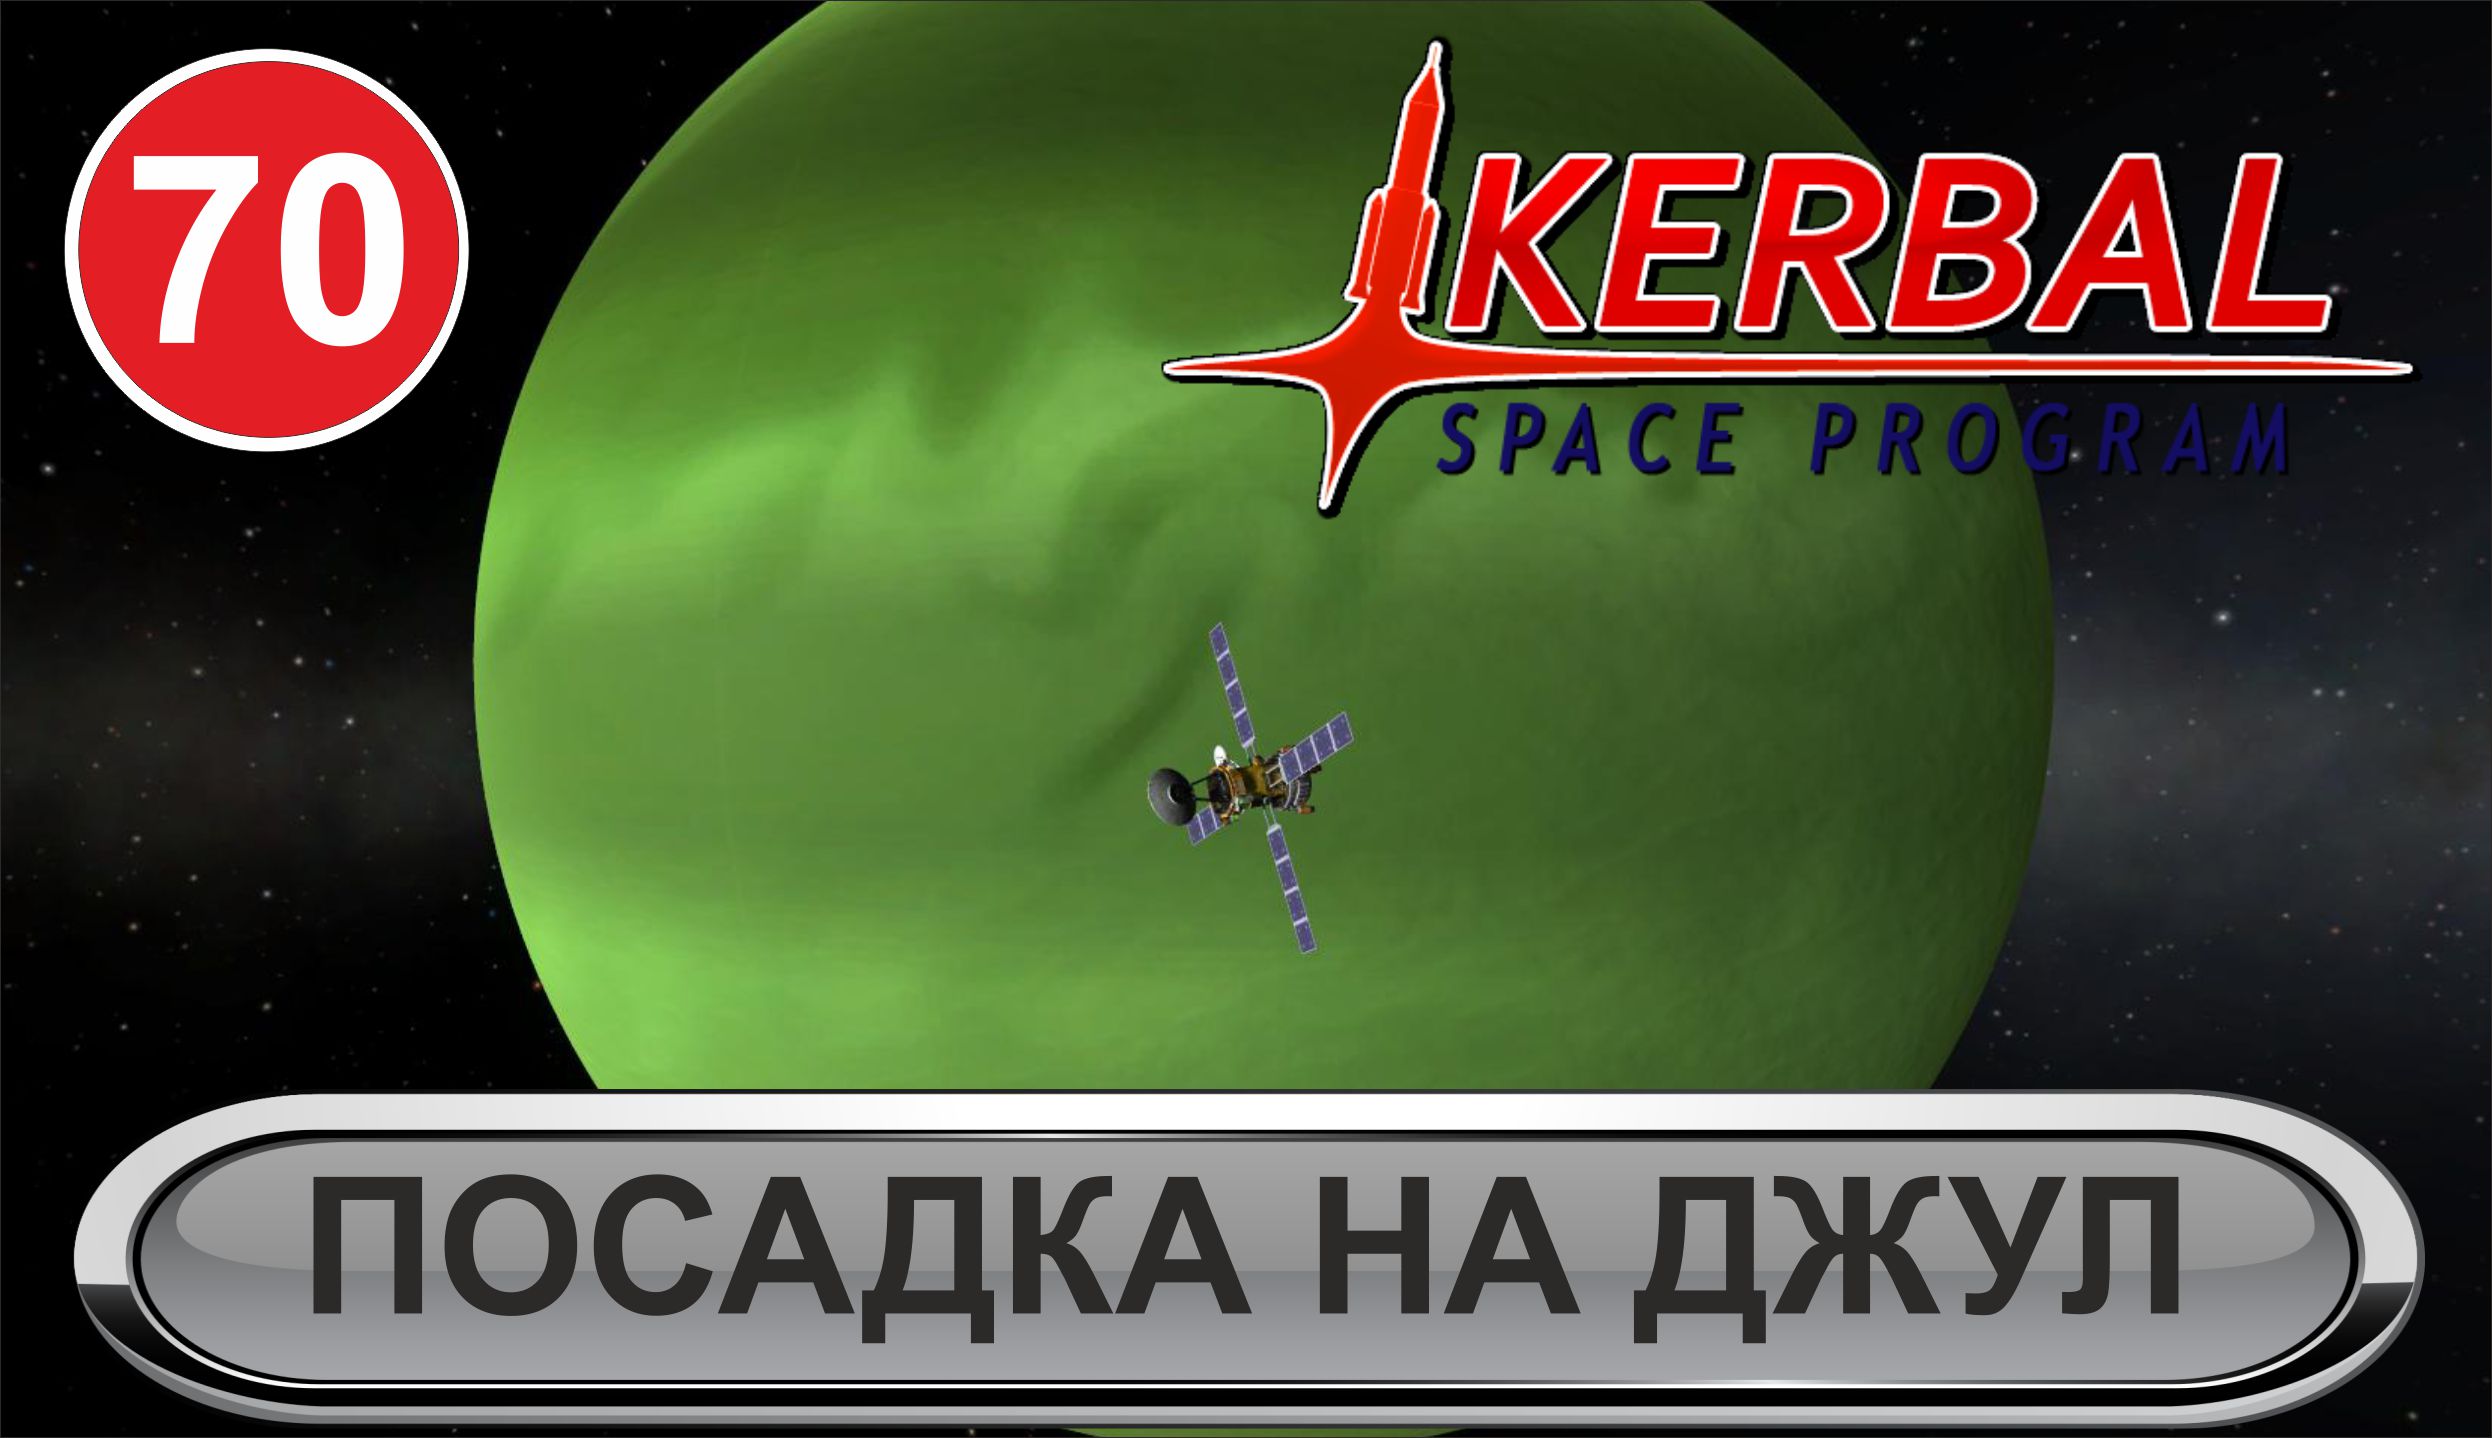 Kerbal Space Program - Посадка на Джул